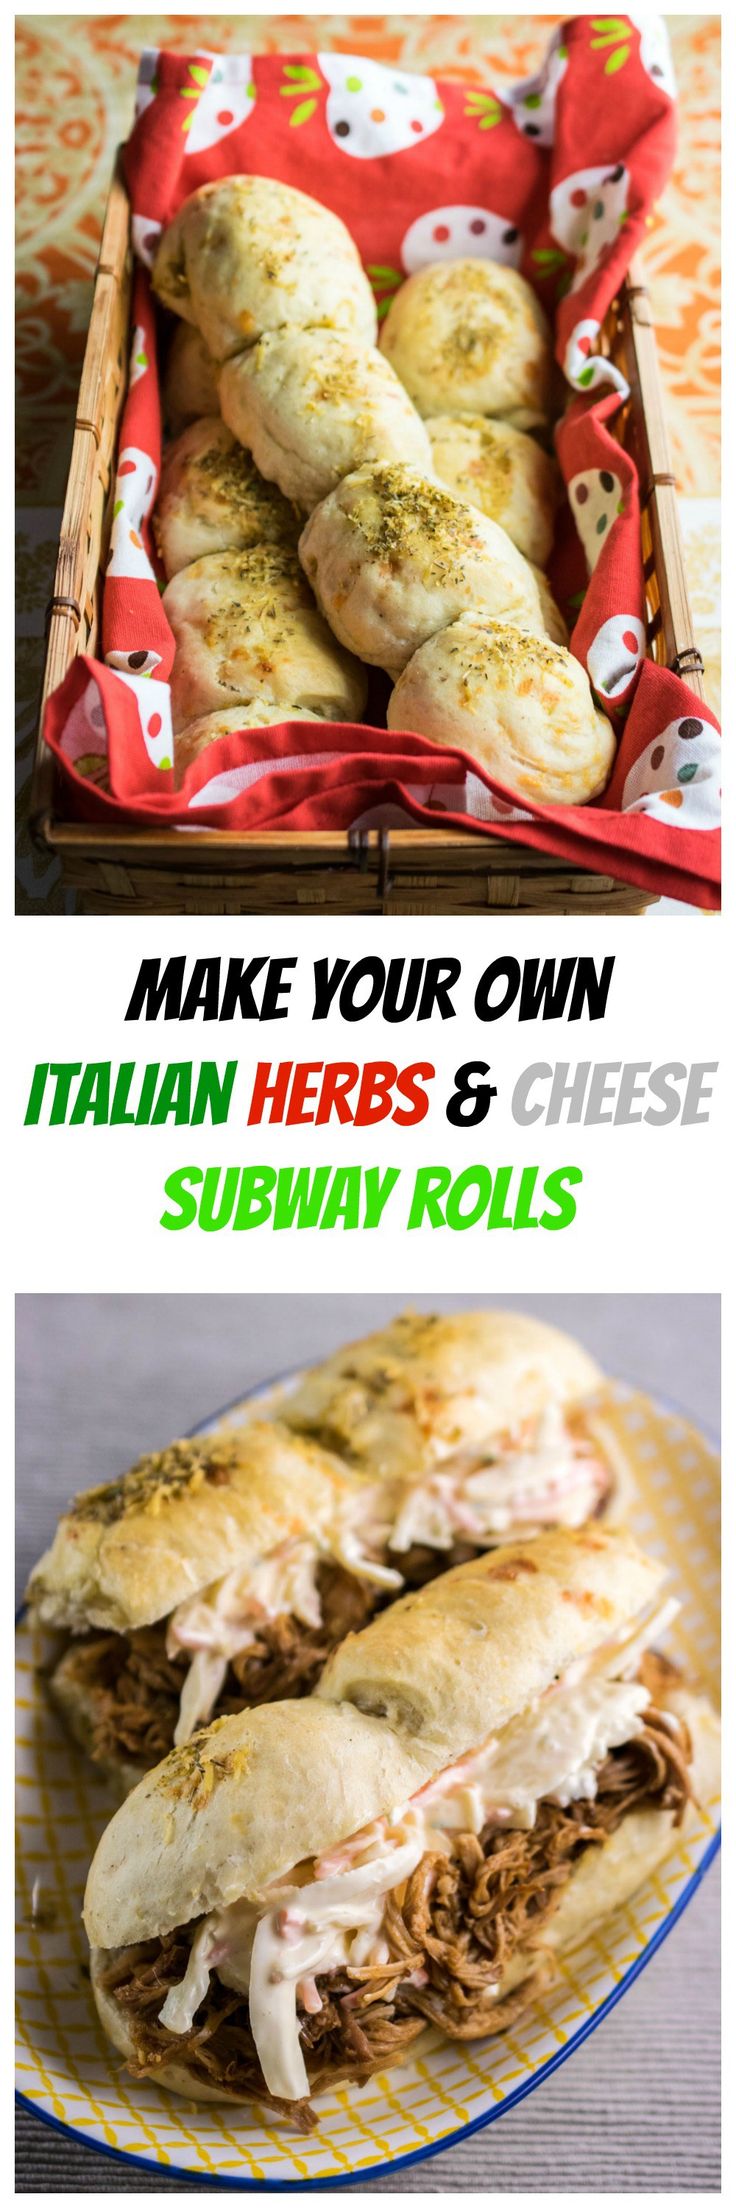 Subway - Veggie-Spinach, Avocado, Tomato, Italian Herbs and Cheese